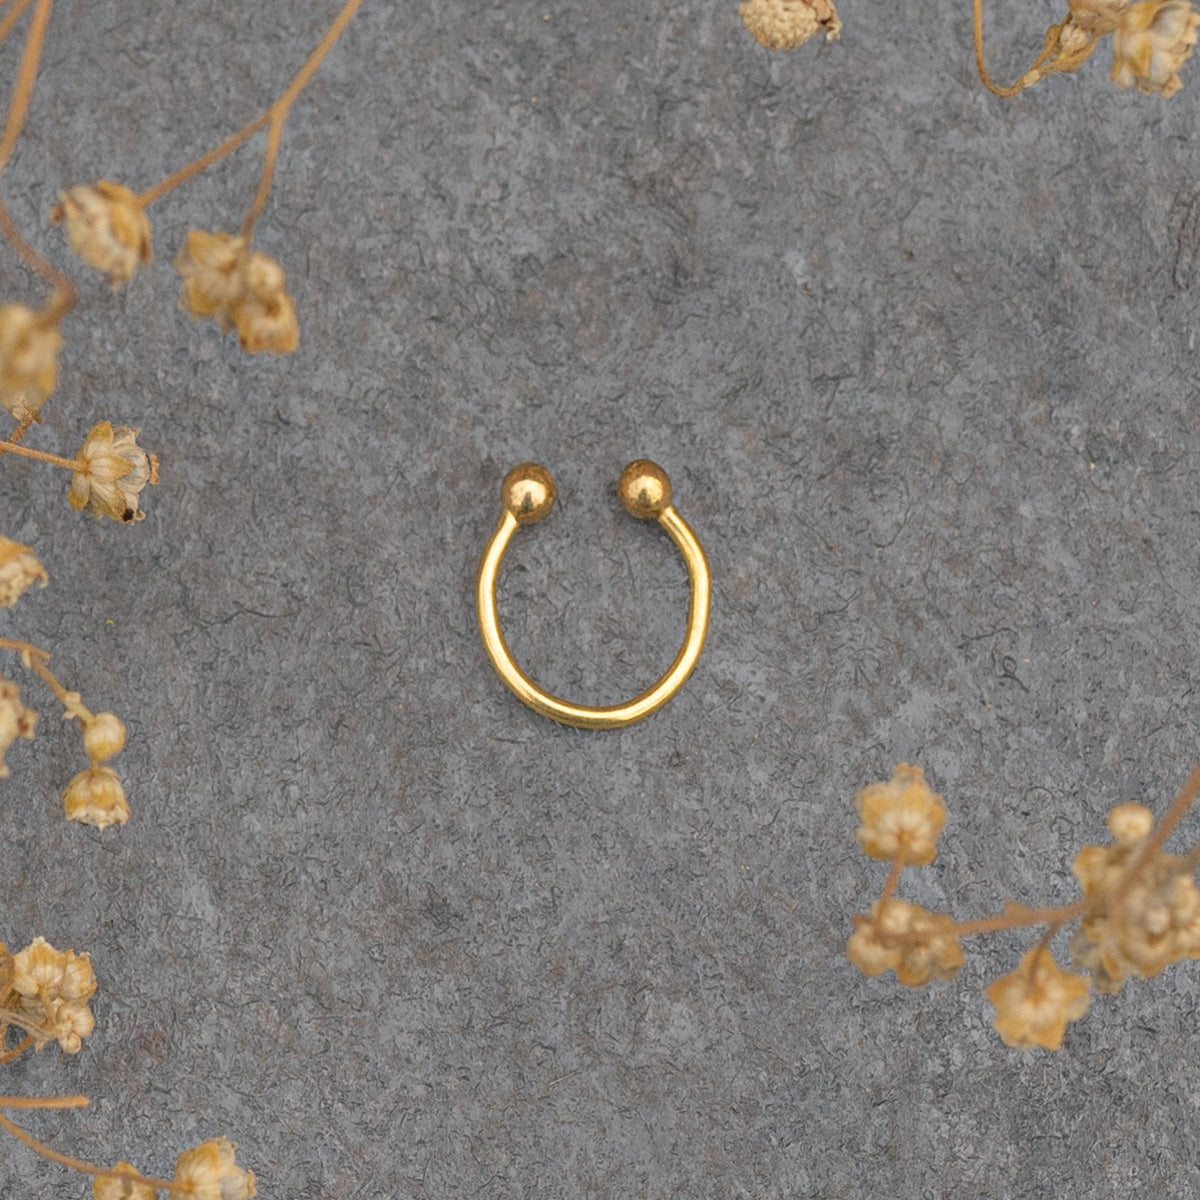 Gold Nose Ring, Indian Nose Ring, Nose Hoop, 18 Gauge Nose Ring, Nose Ring  Gold, Nose Ring Gold, Solid Gold Nose Ring, Nose Jewelry, SKU 62 - Etsy